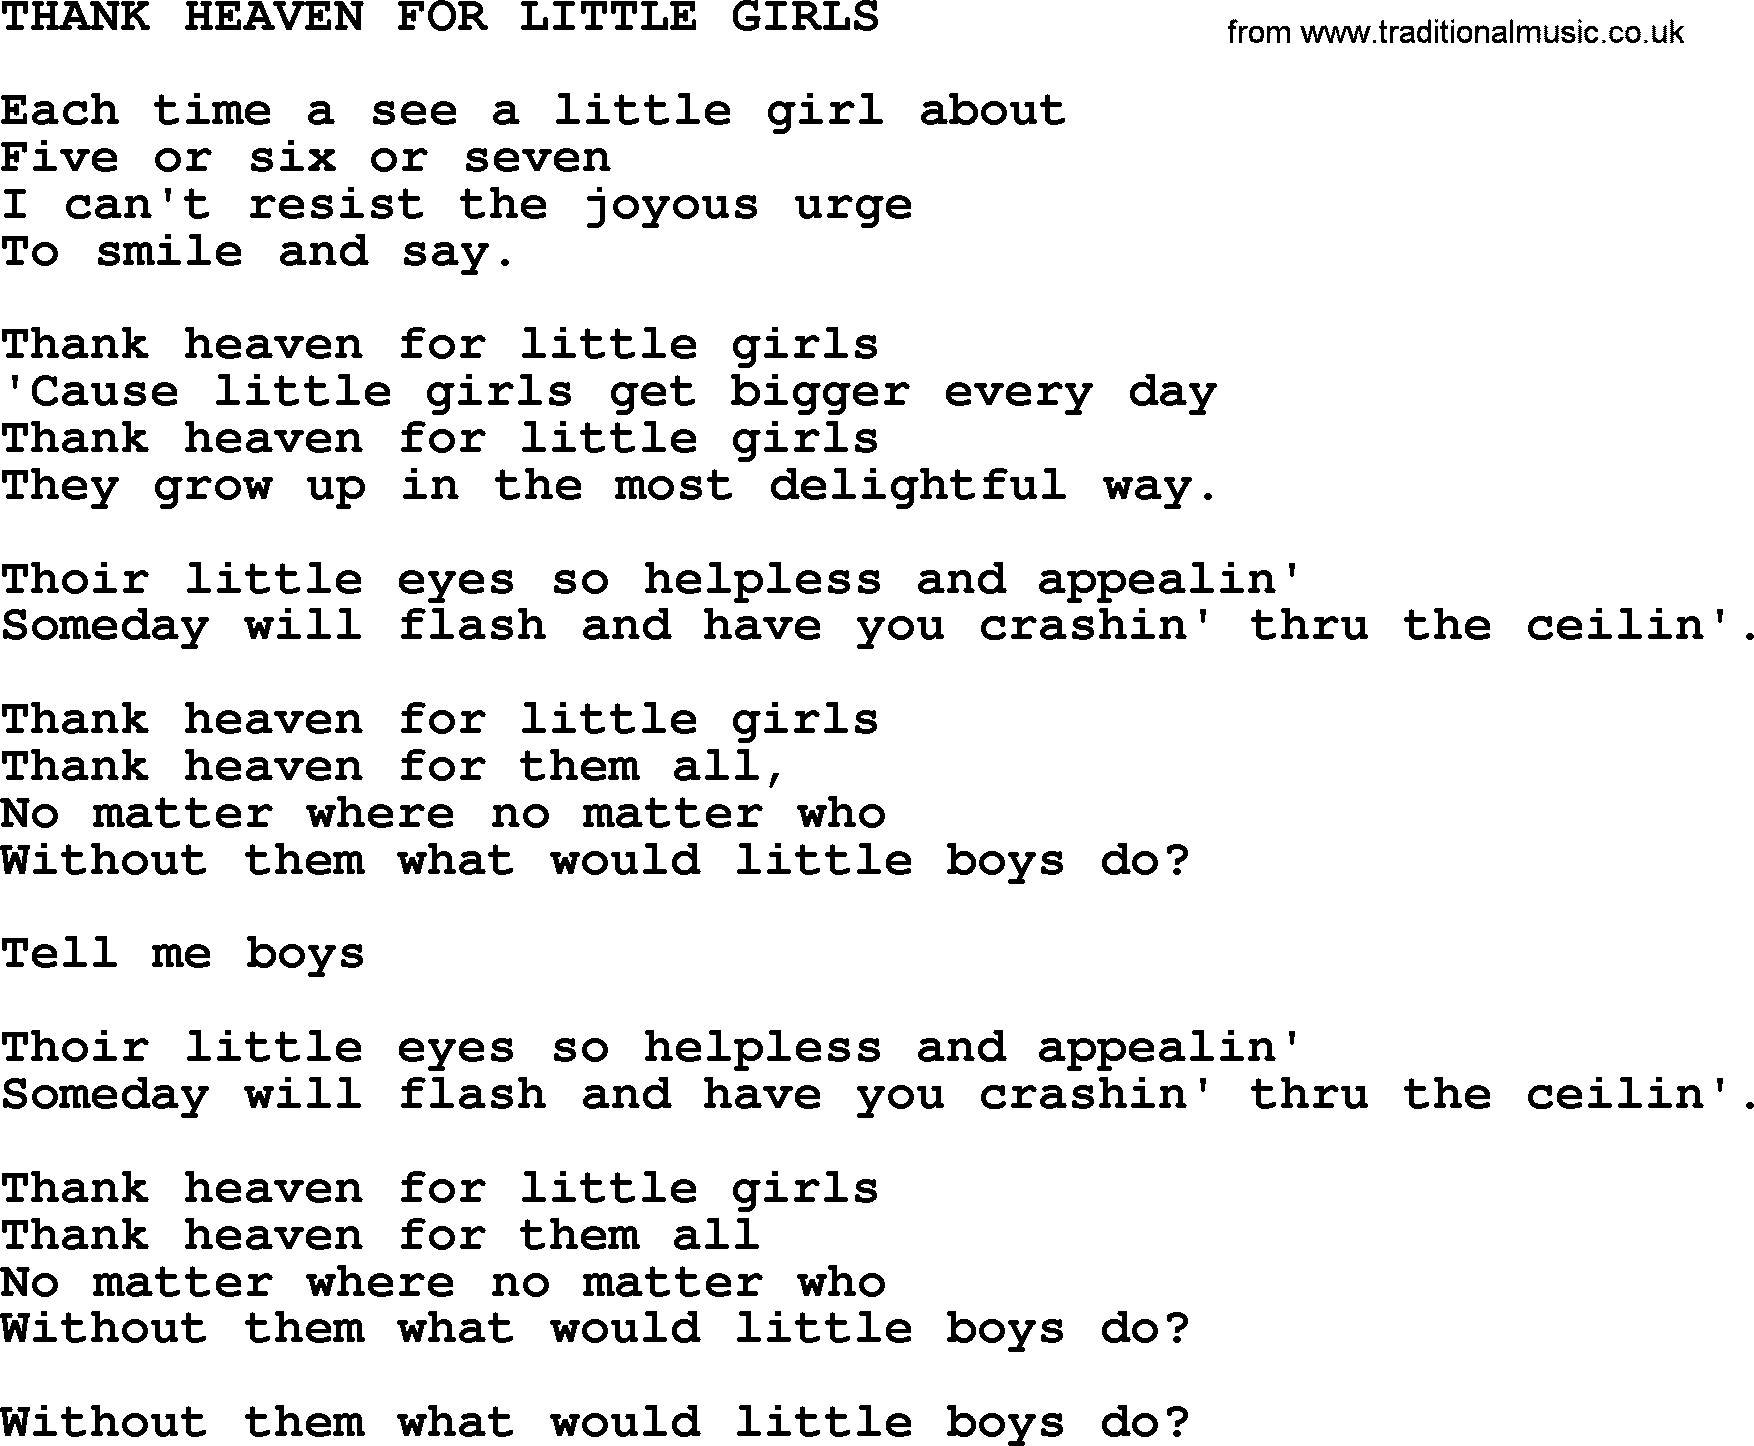 Merle Haggard song: Thank Heaven For Little Girls, lyrics.